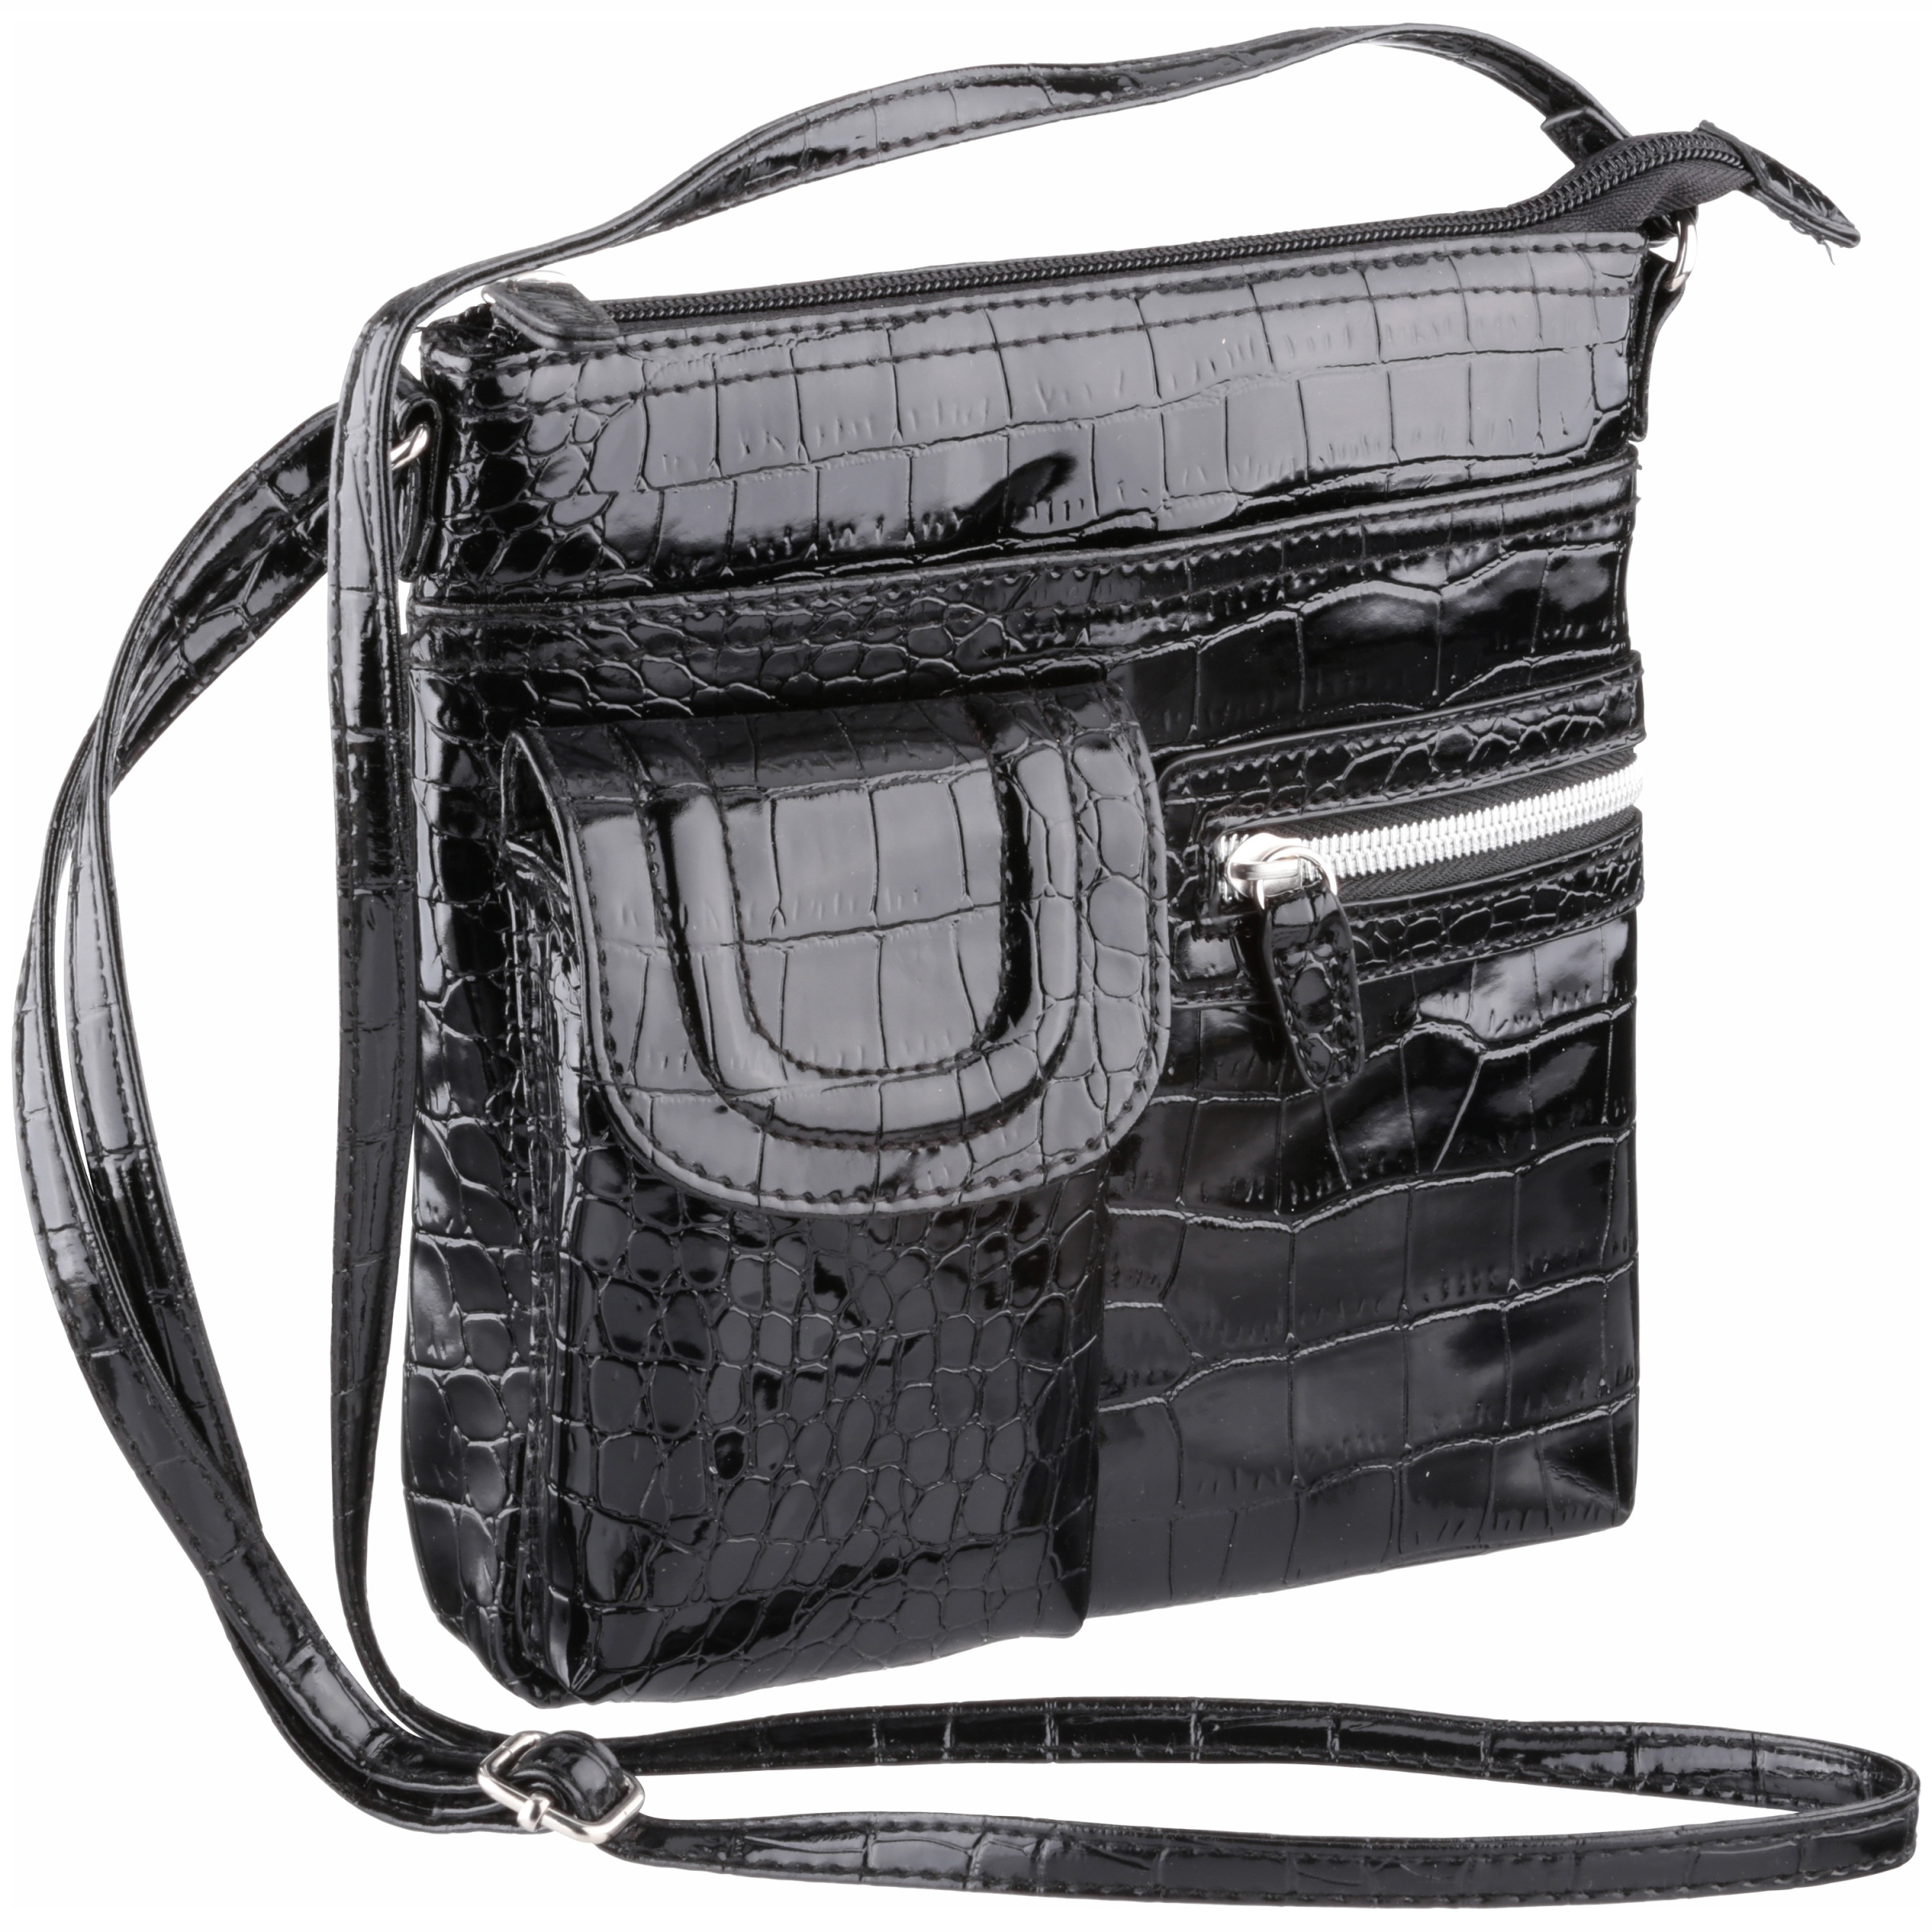 George® Shiny Black Handbag - image 1 of 5